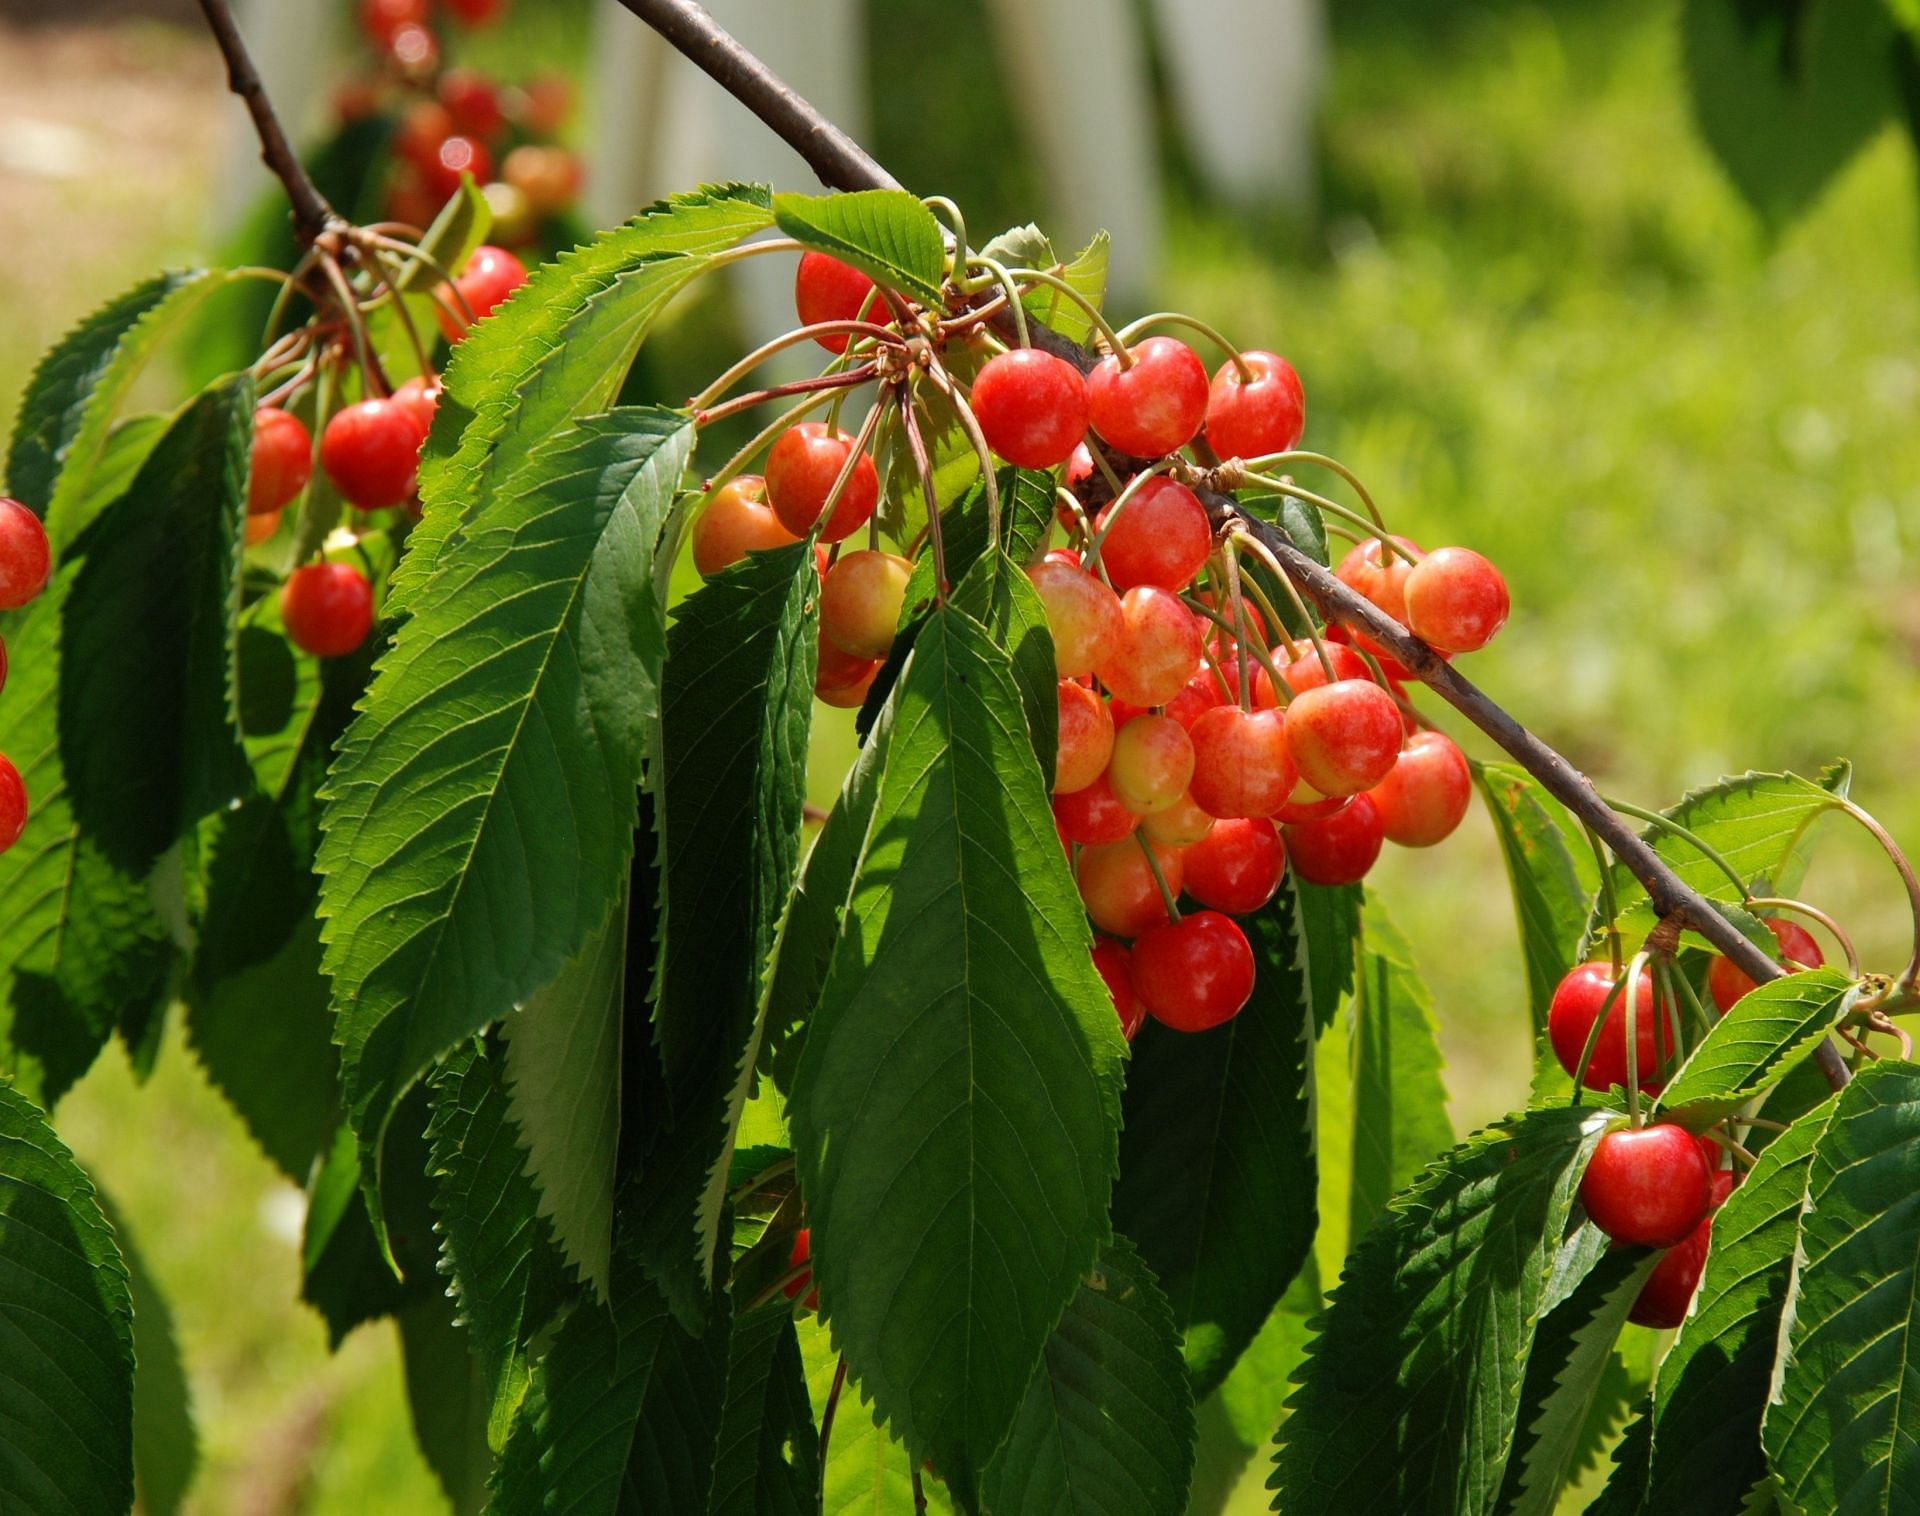 Tart cherry juice works very well in reducing inflammation. (Image via Pexels/Pixabay)